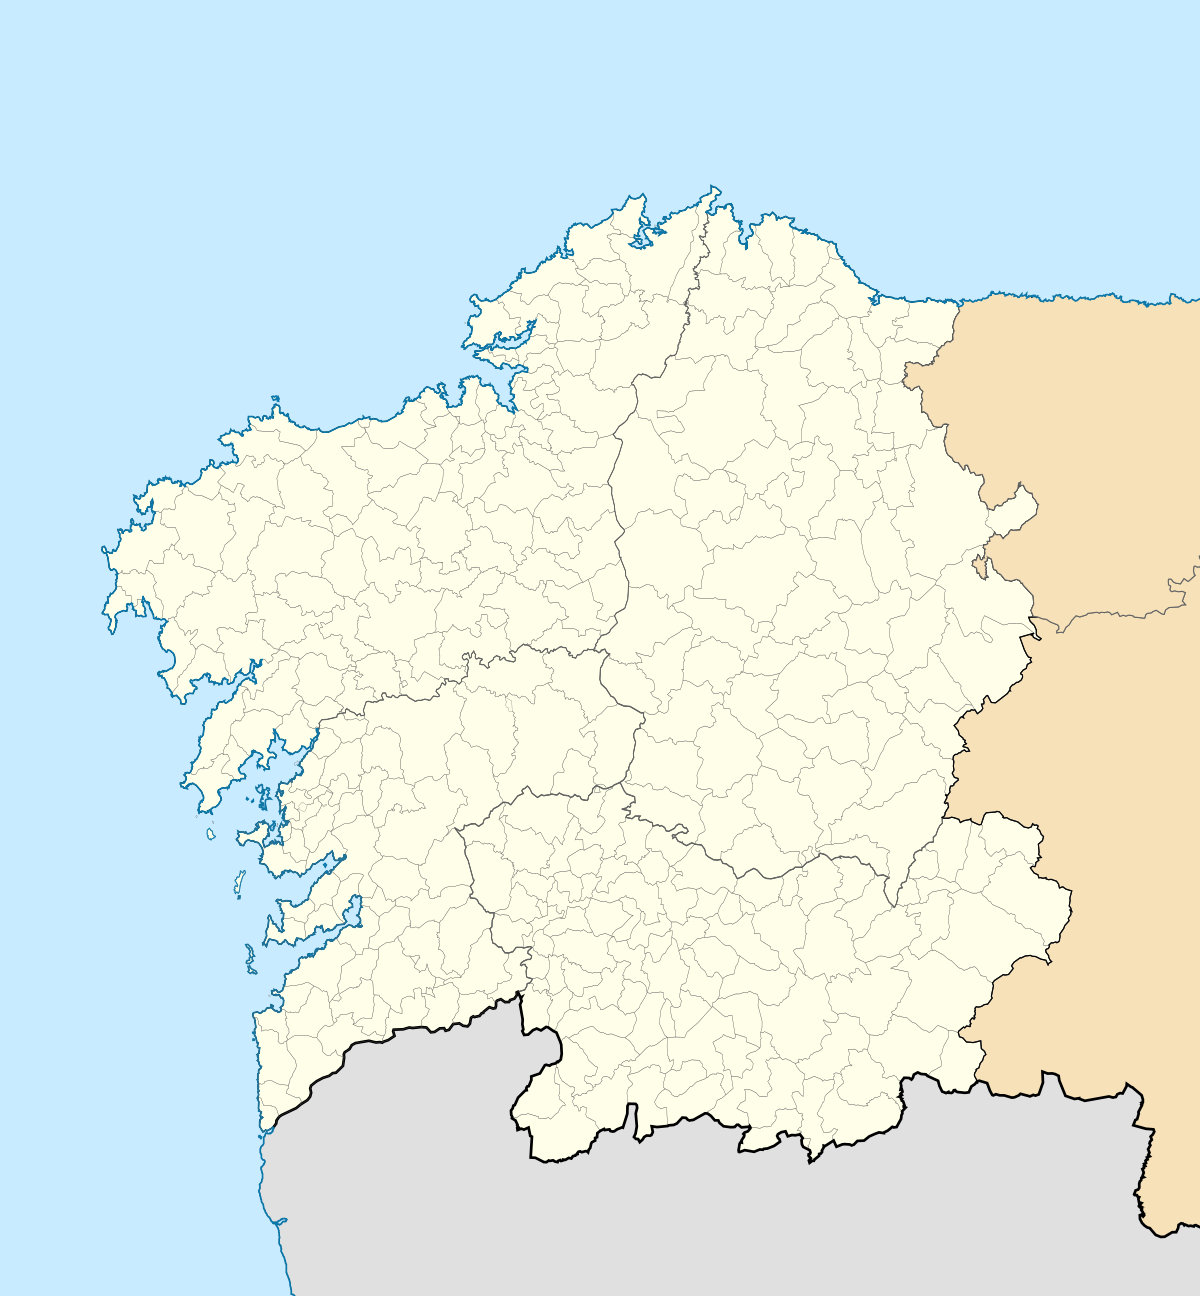 Spain Galicia location map.svg